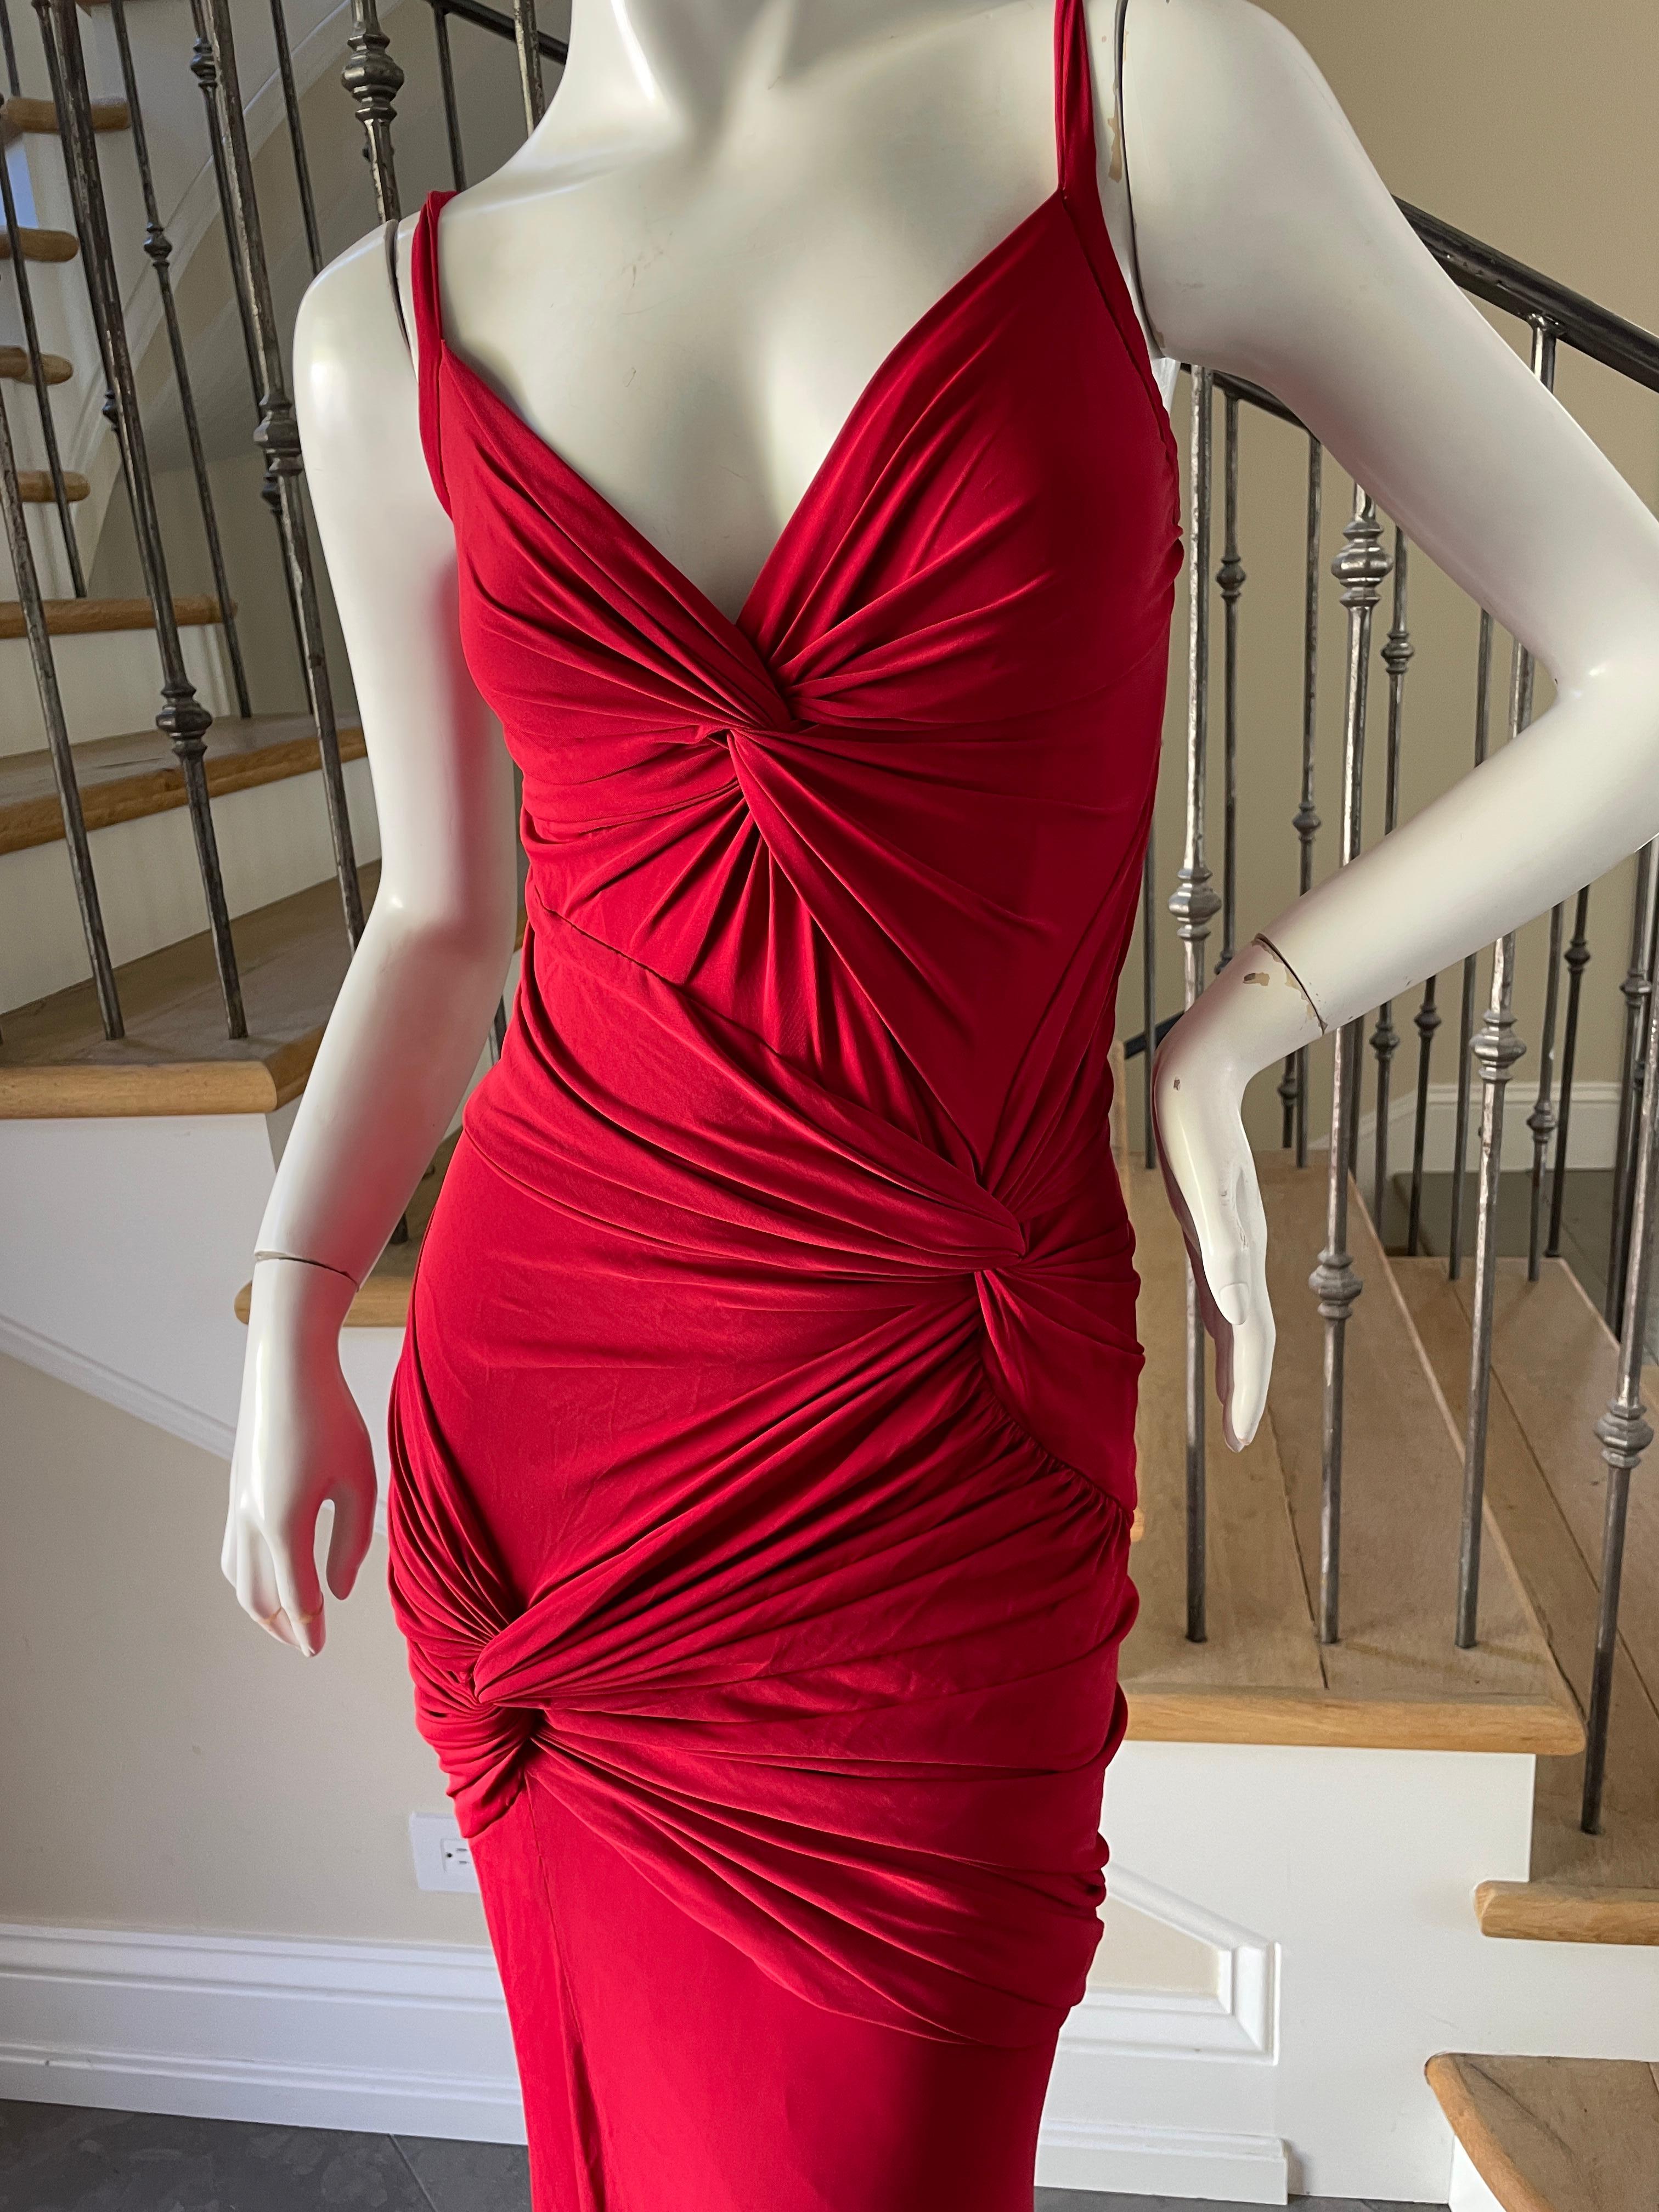 Donna Karan Vintage Red Knotted Cocktail Dress
 Size M
Bust 34